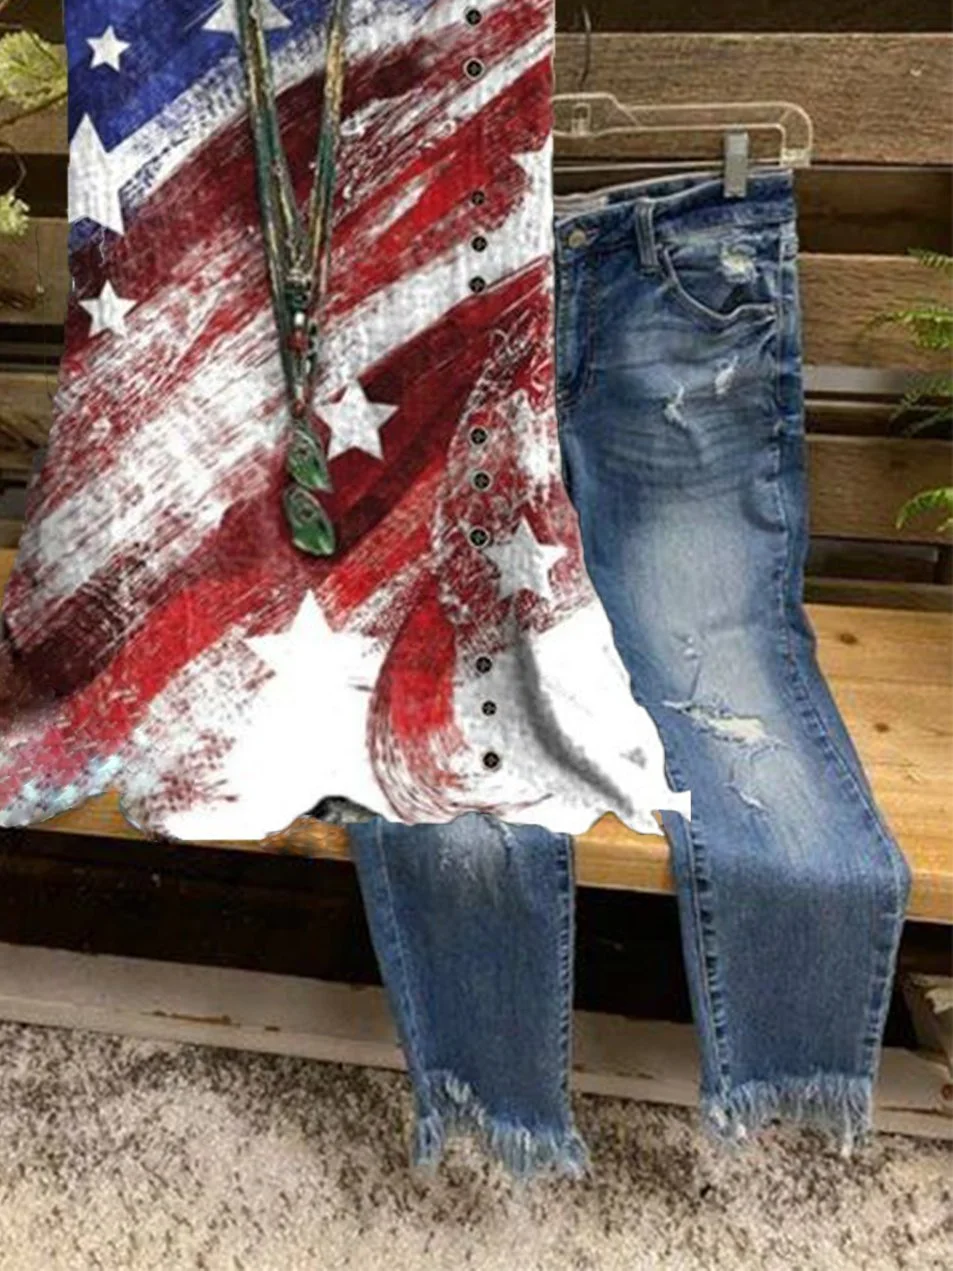 A sleeveless shirt with an American flag print